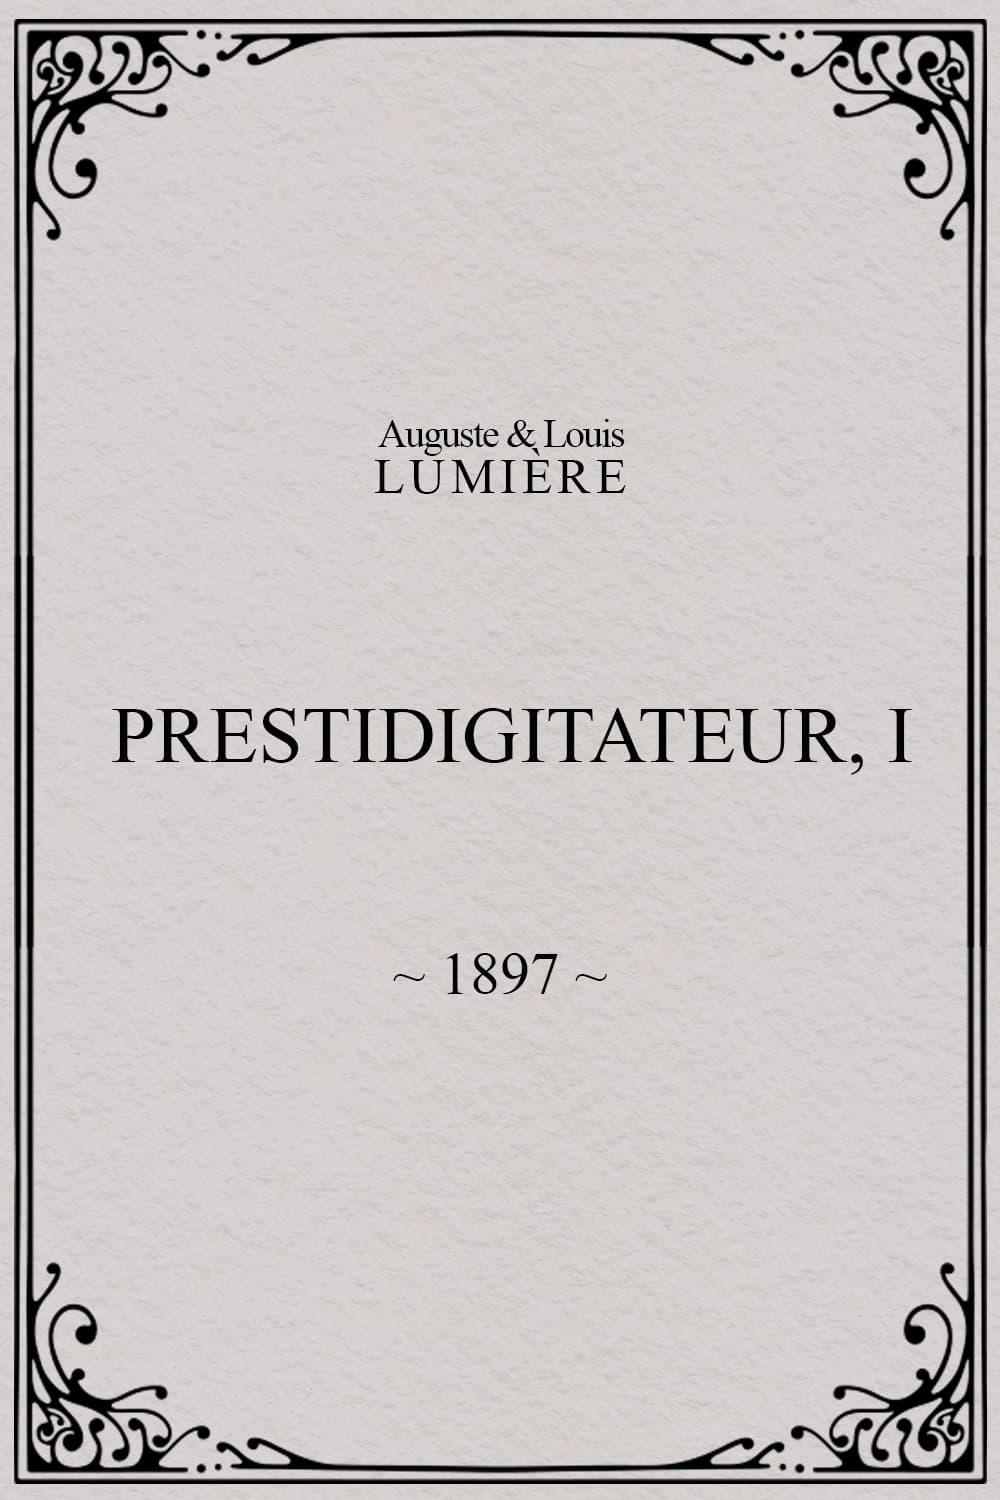 Prestidigitateur, I (1897)